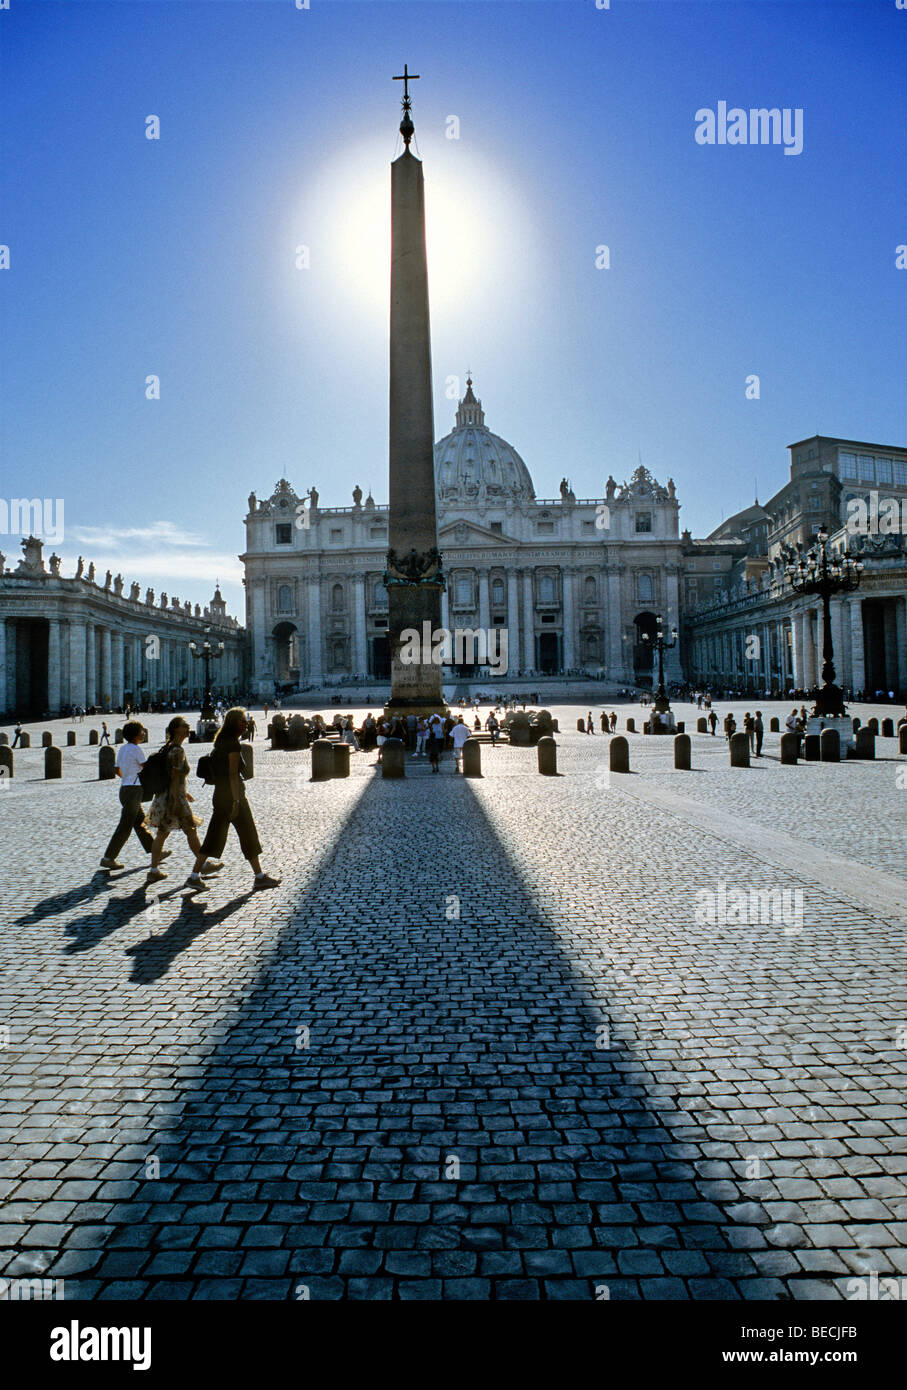 St. Peter's Basilica, Basilica di San Pietro, obelisk, Saint Peter's Square, Piazza San Pietro, Vatican City, Rome, Latium, Ita Stock Photo